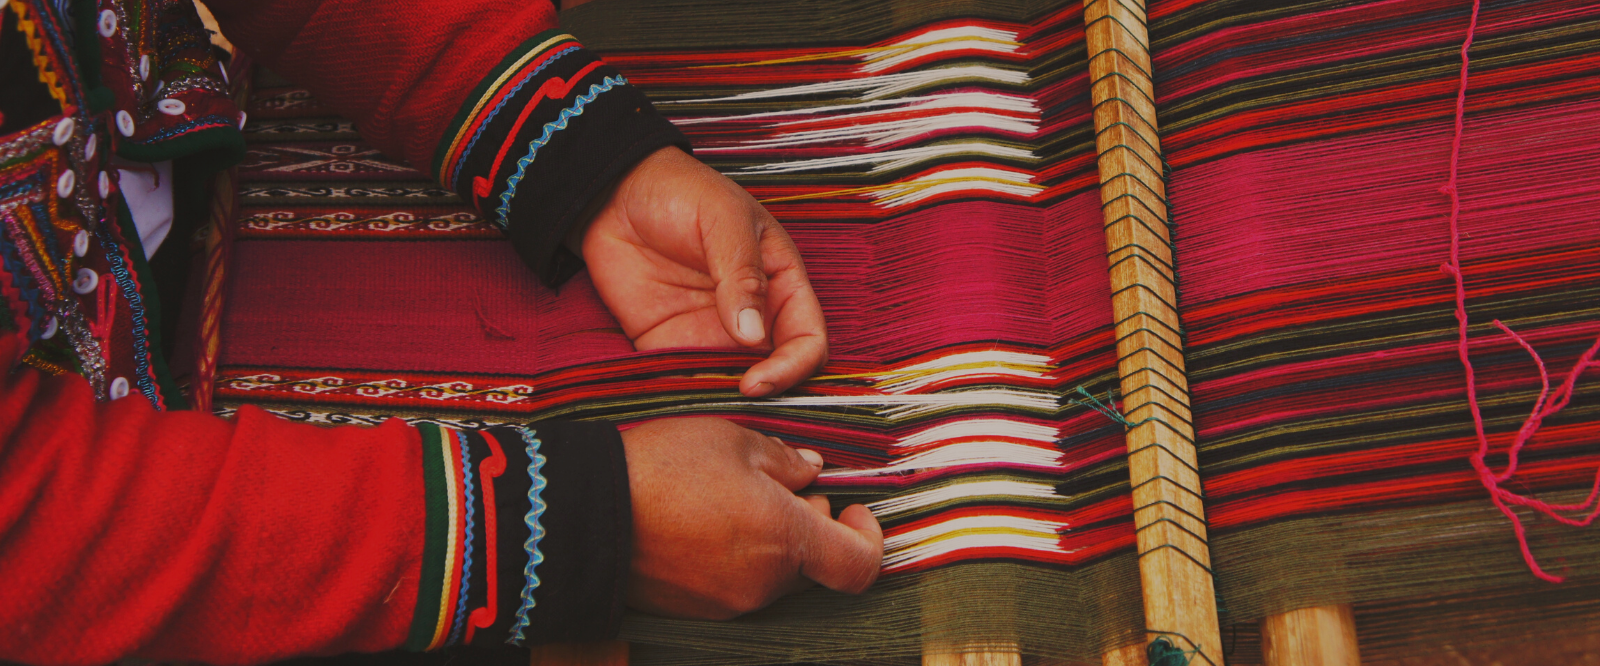 woman weaving thread on loom